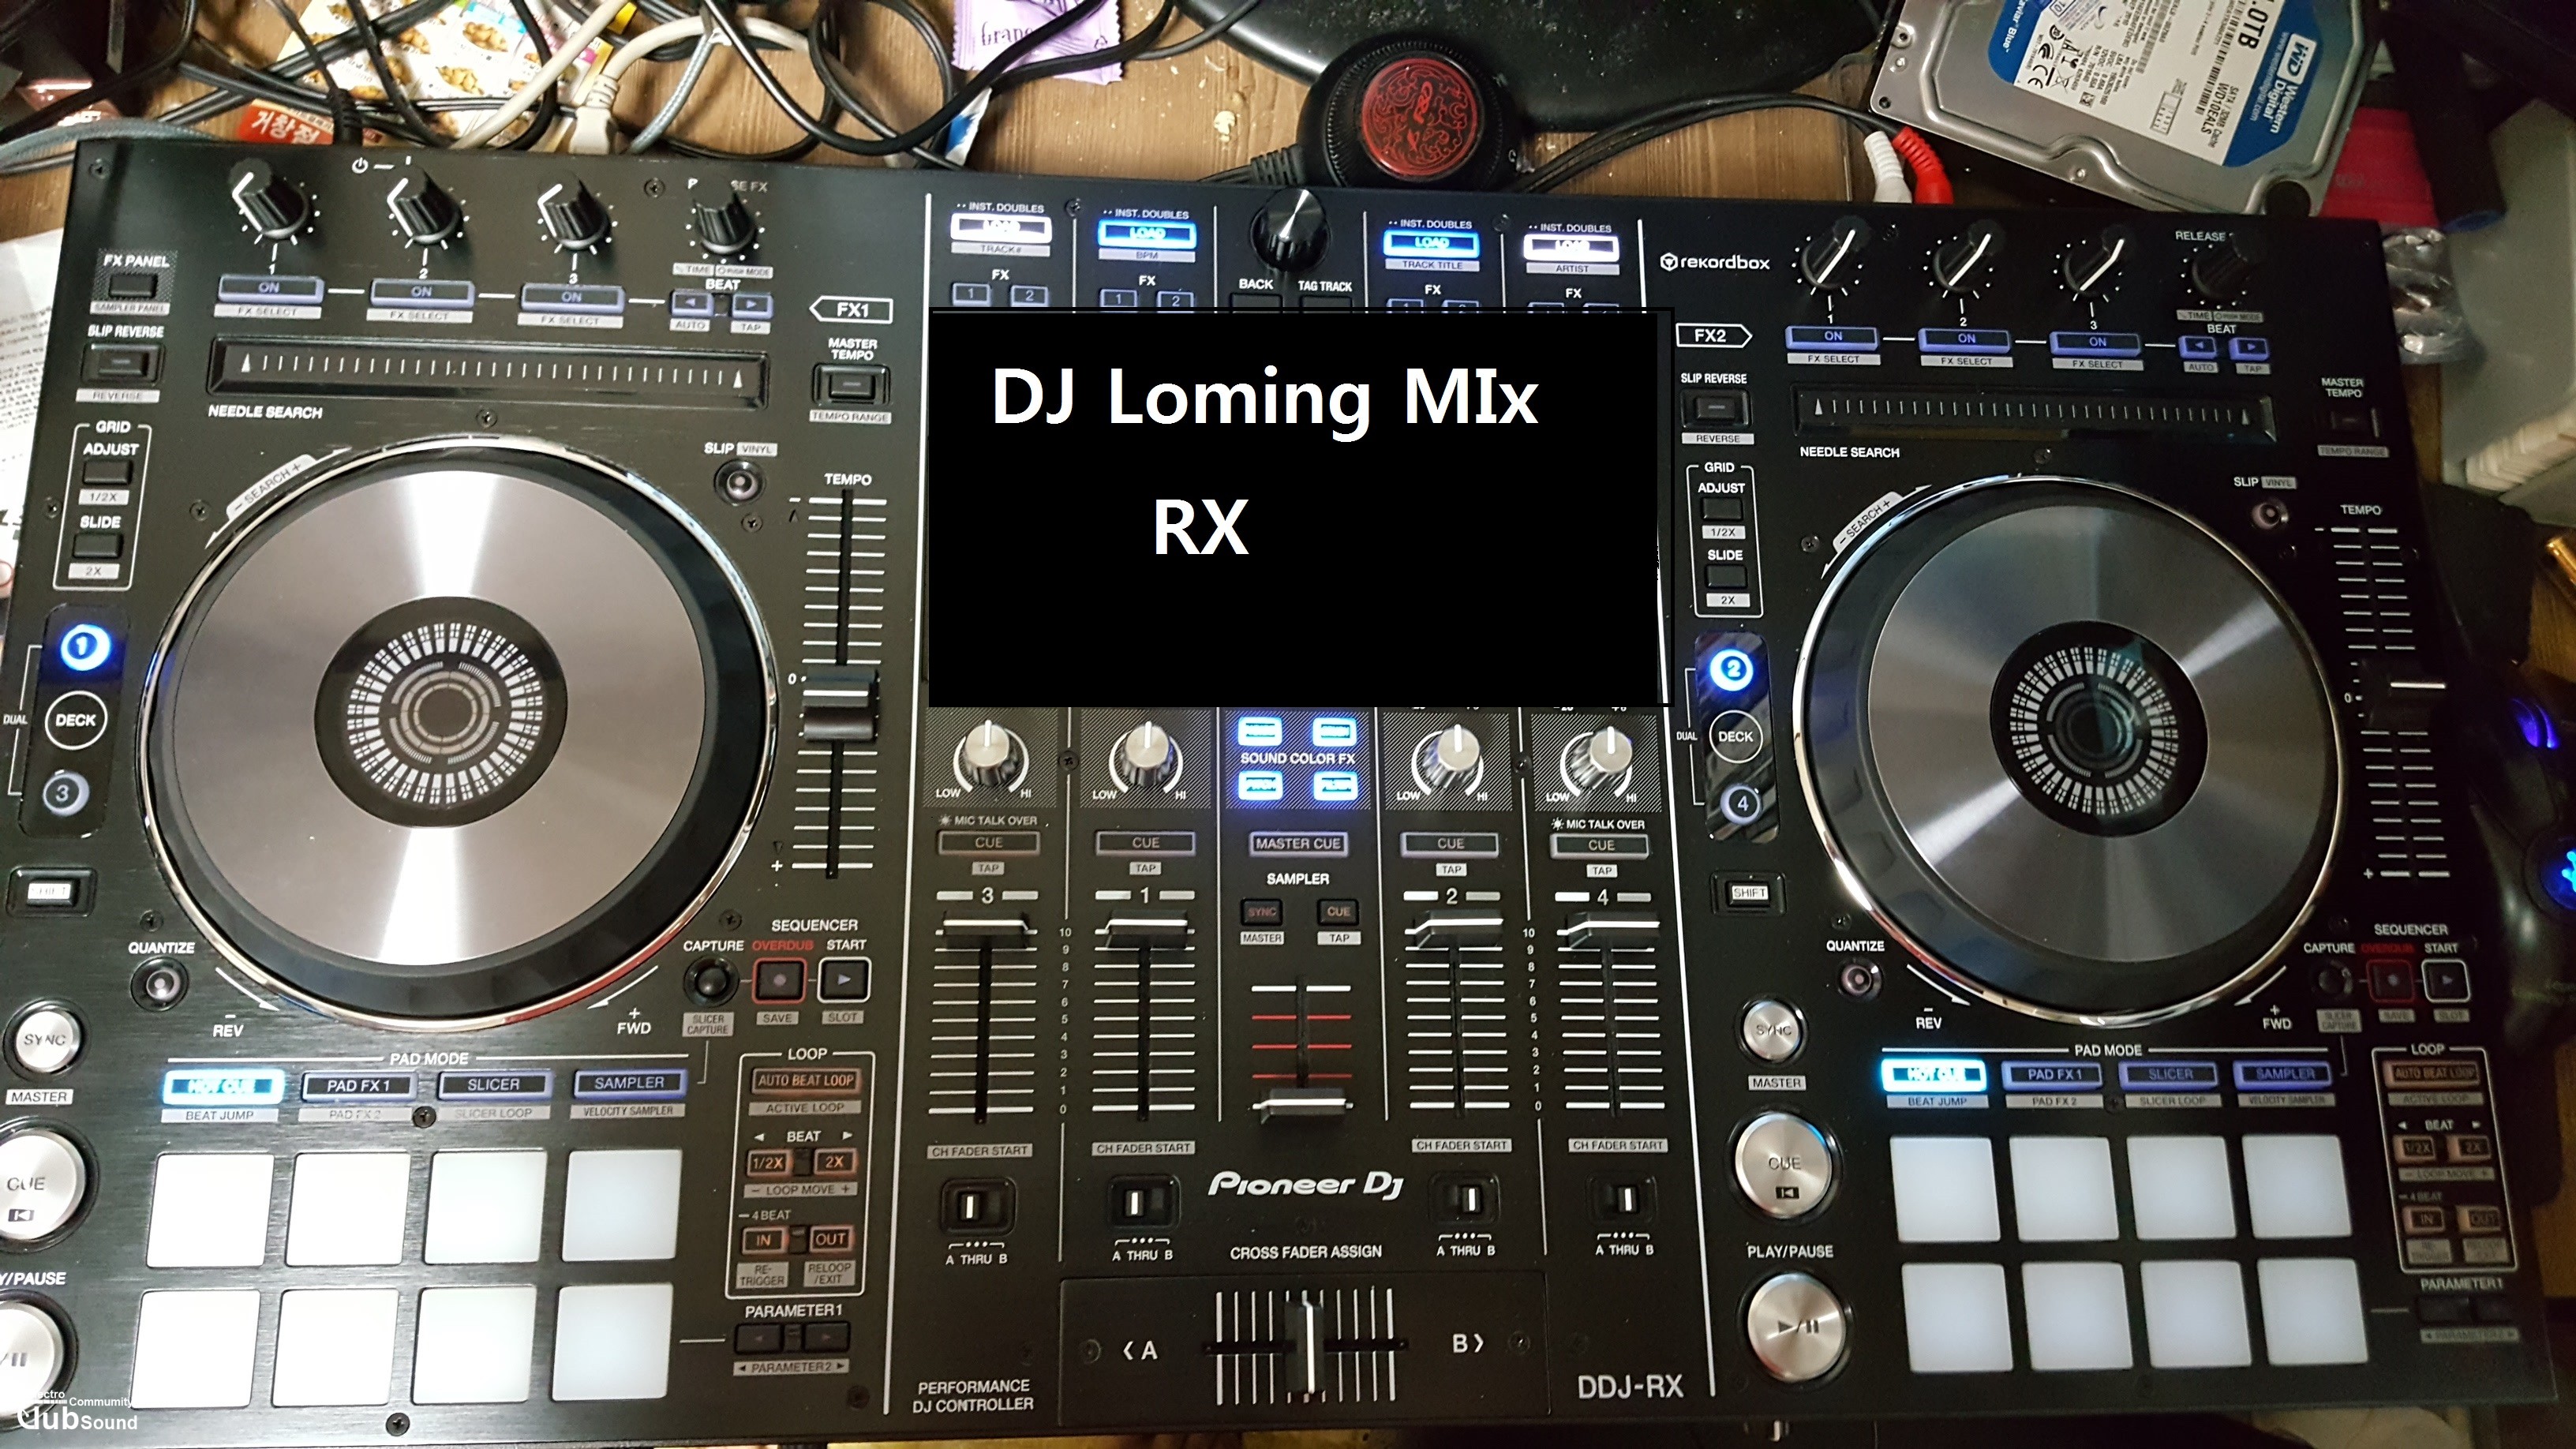 DJ Loming mix(RX).jpg : DJ Loming URX1(유튜브버전) 테스트로 올려봤어요